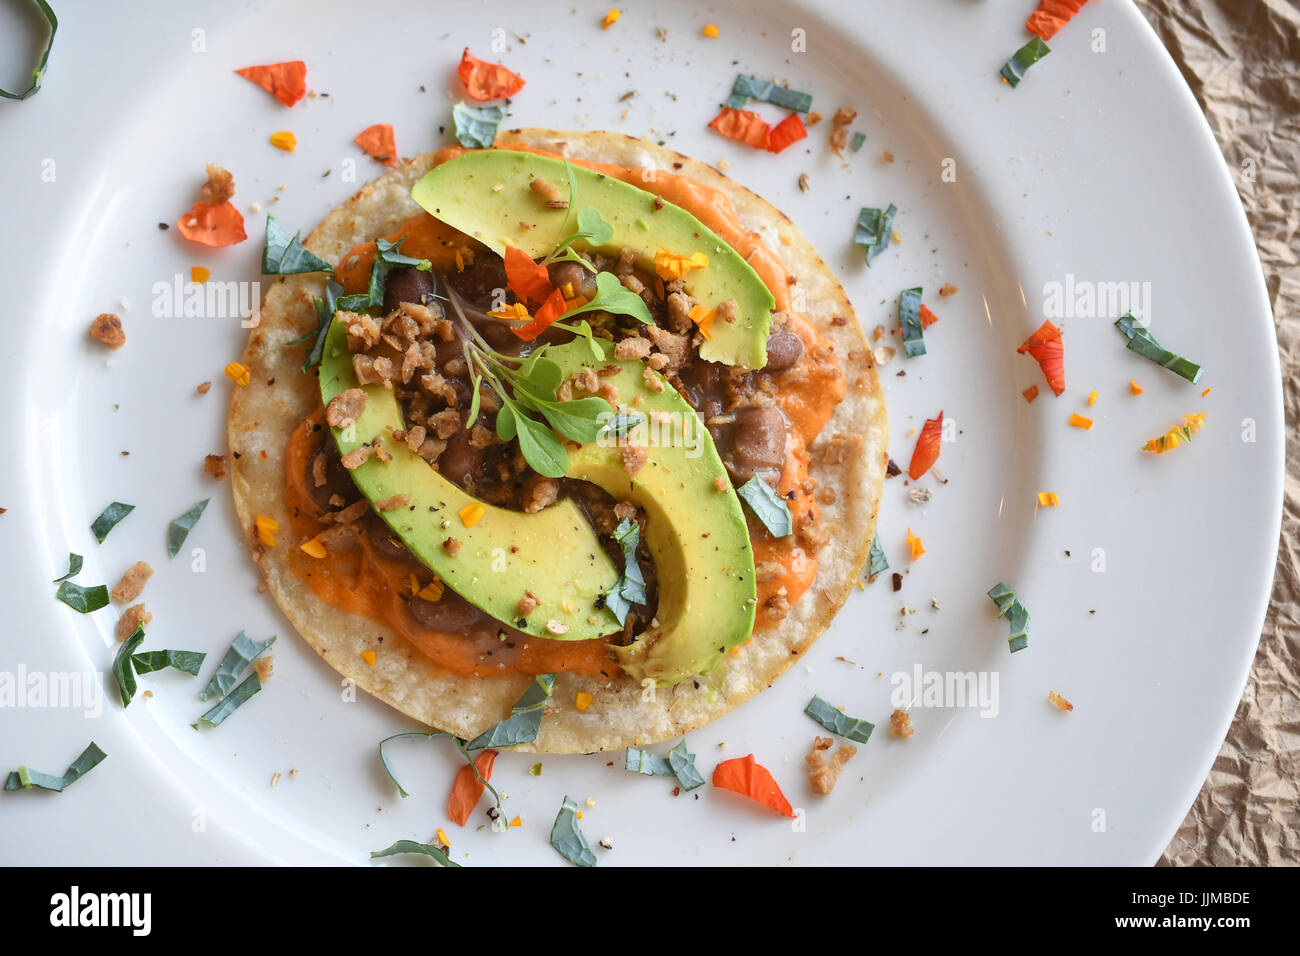 Taco Tuesday, vegan tacos with chorizo beans, vegan cheese, avocado, blue flower petal and a yellow flower. Stock Photo